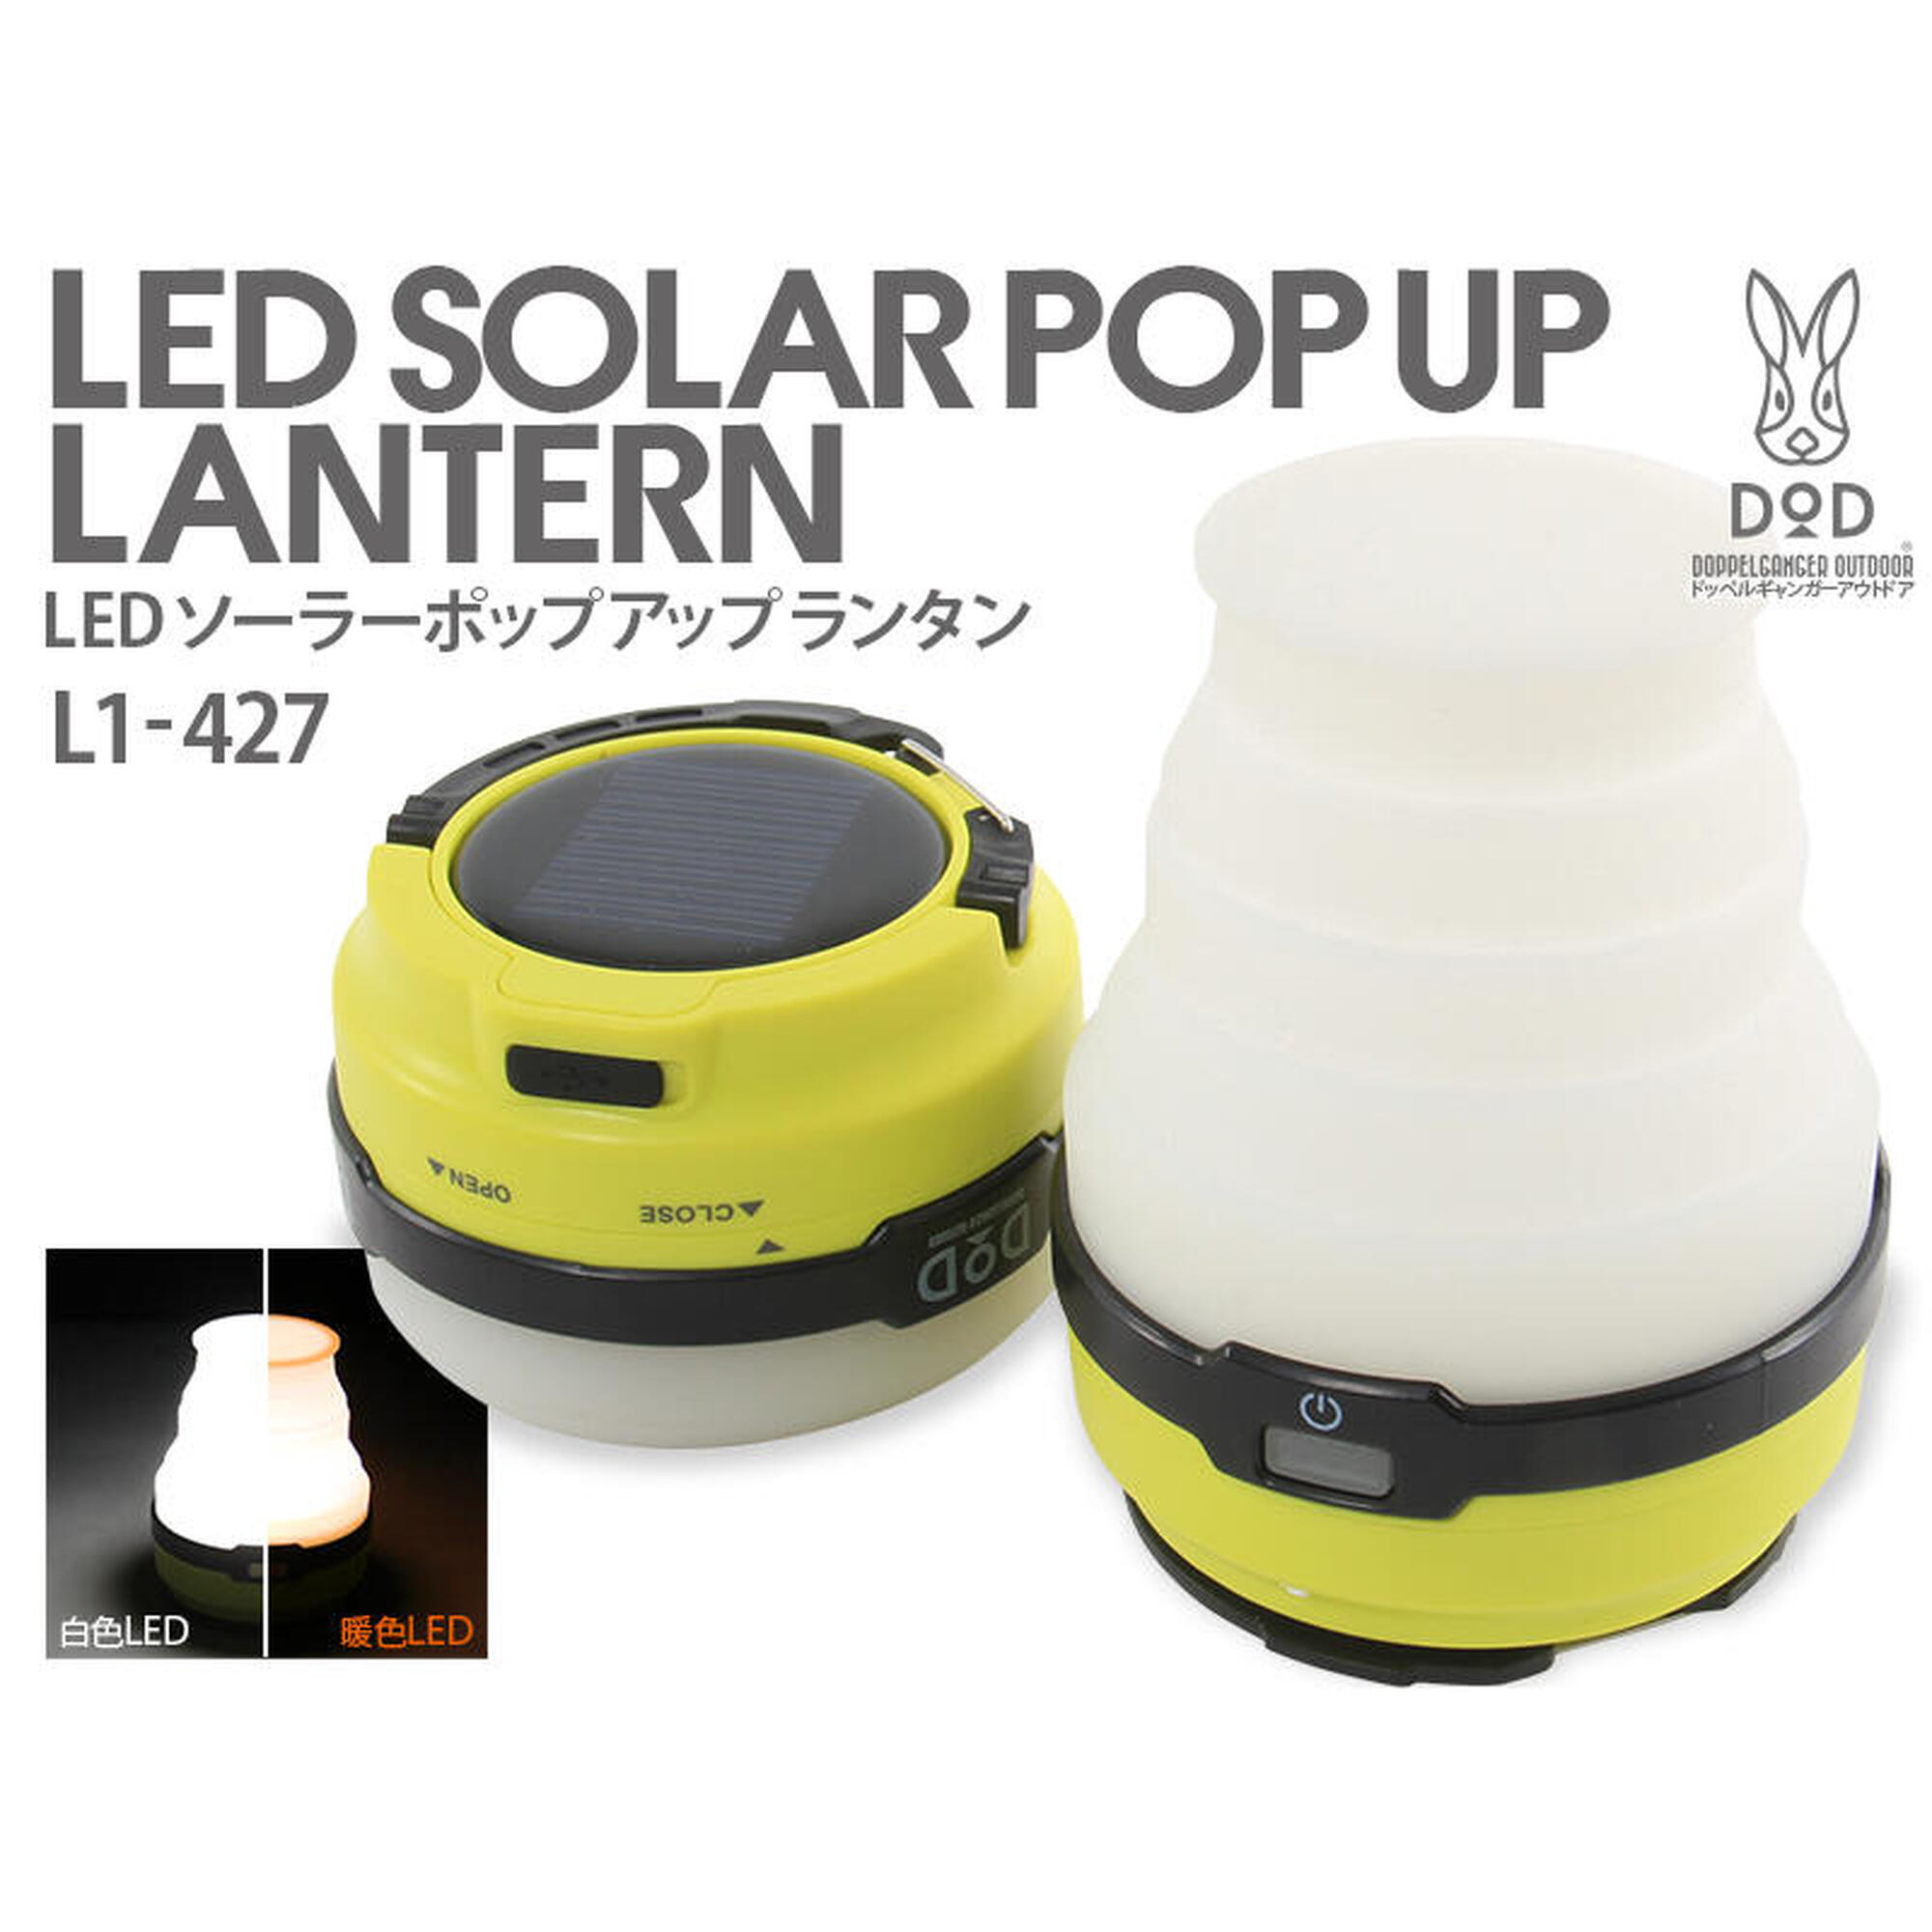 L1-427 Led Solar Pop-up Lantern - YELLOW